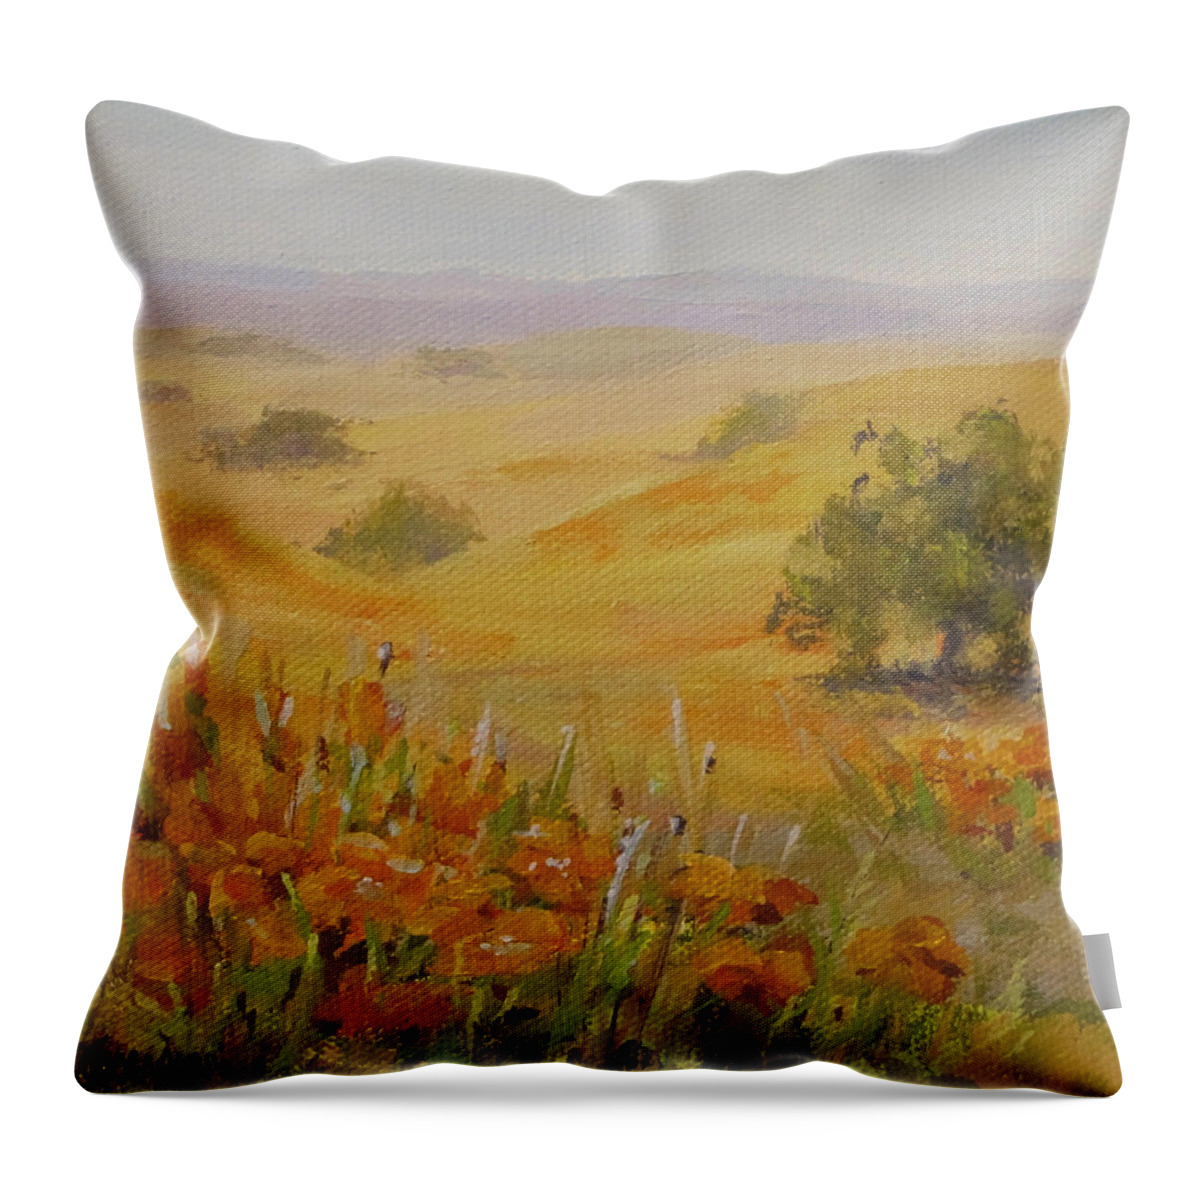 California Throw Pillow featuring the painting California Memory by Karen Ilari